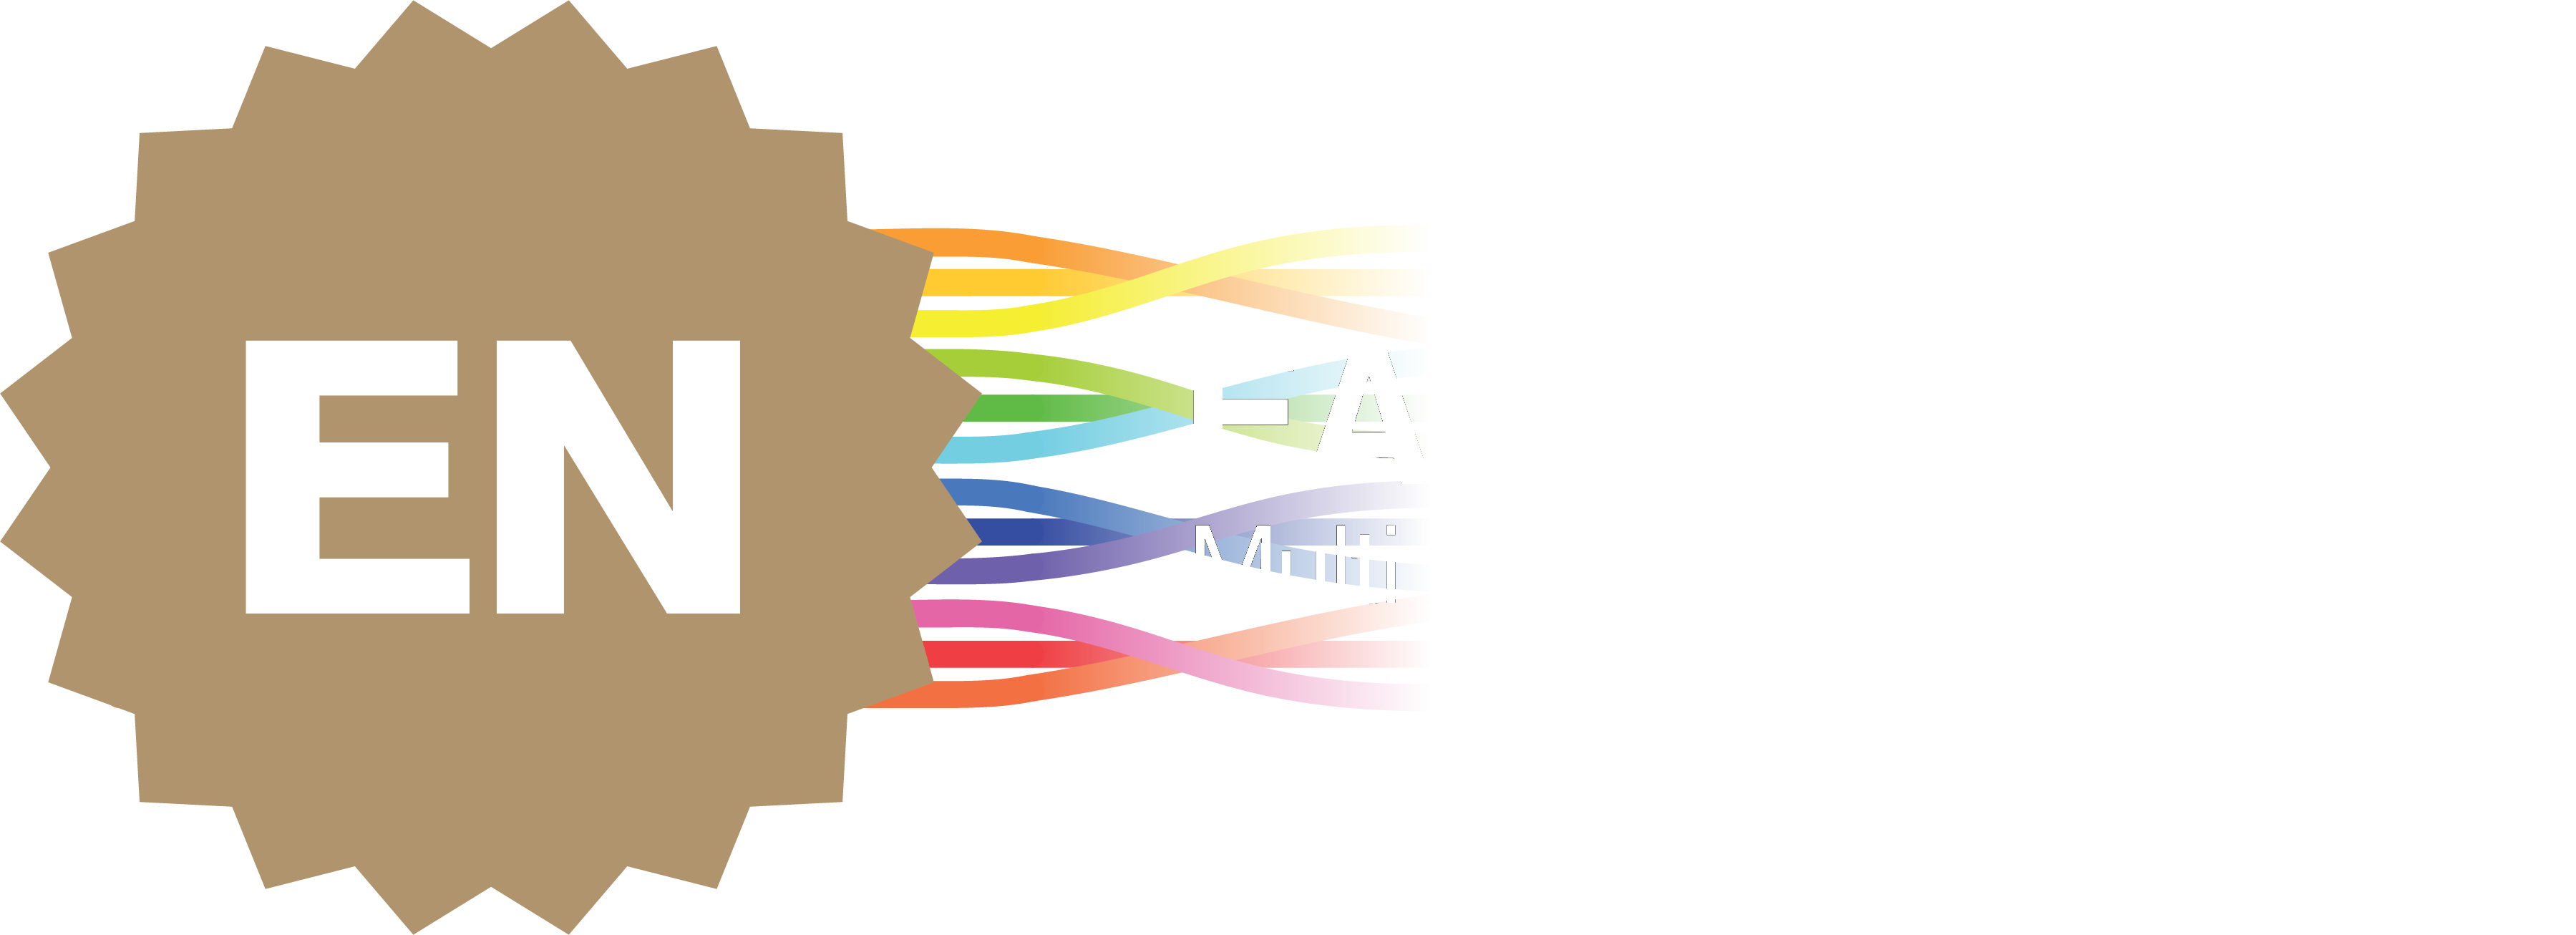 East Norfolk Multi Academy Trust